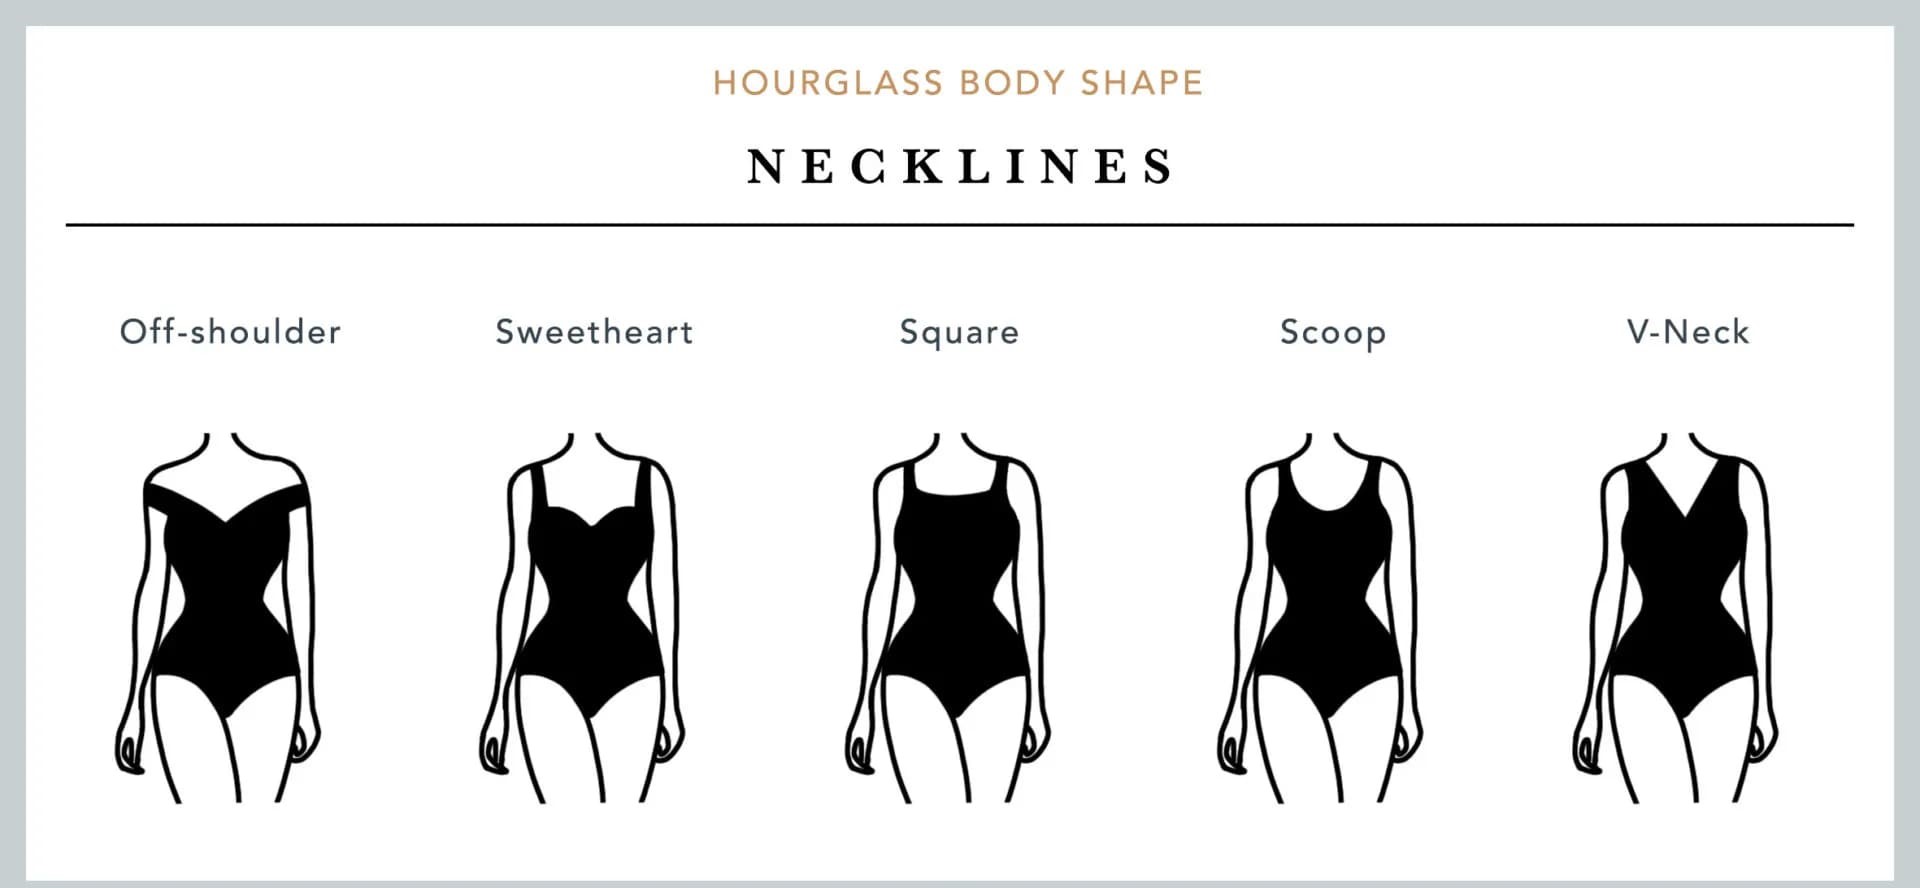 Hourglass body shape